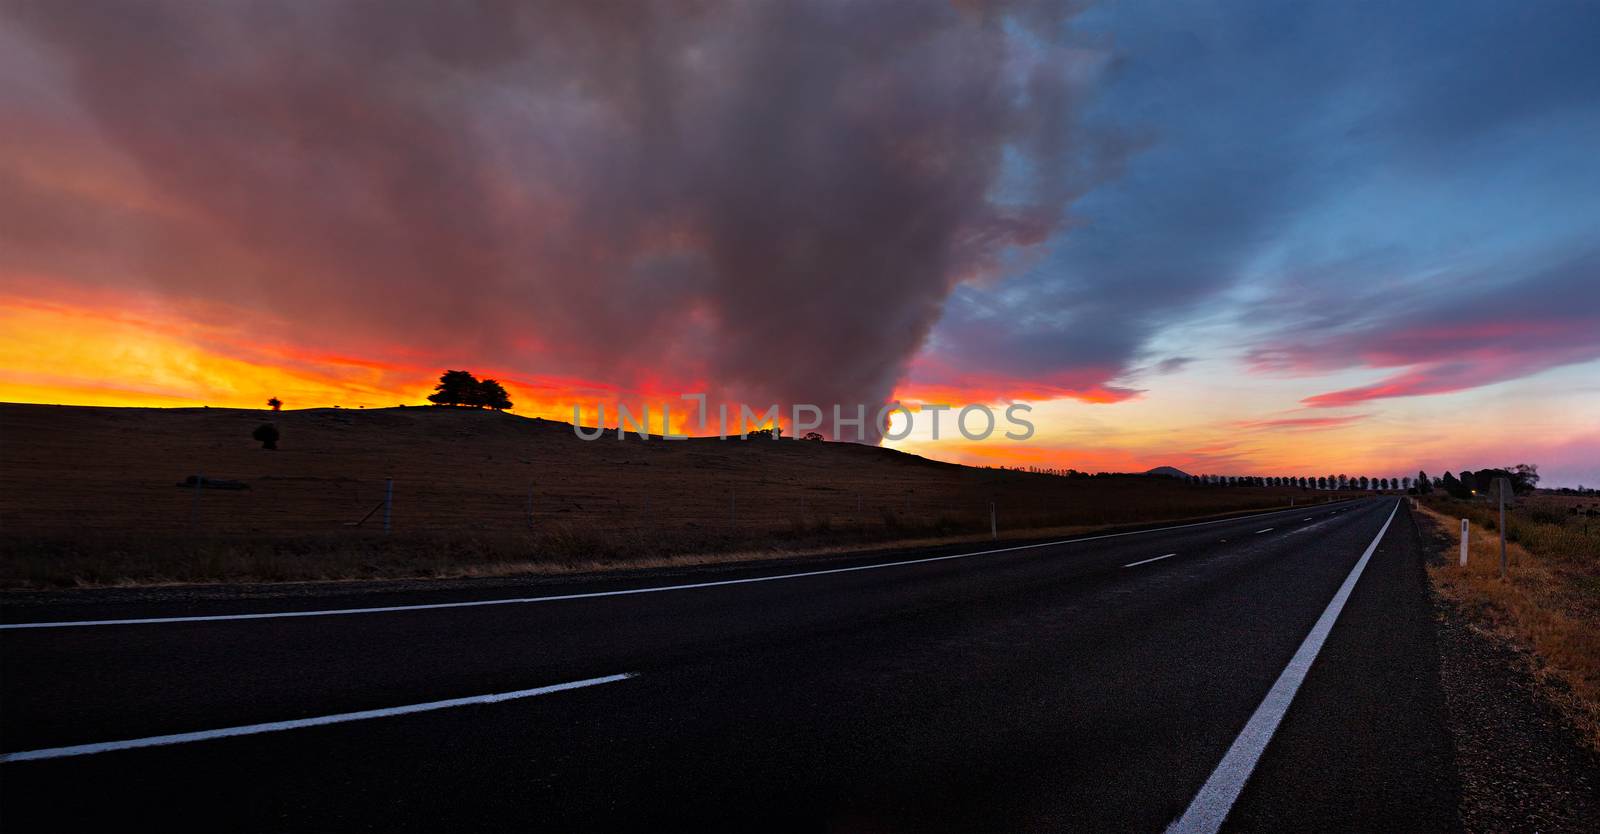 Bush fire burning in rural Australia by lovleah